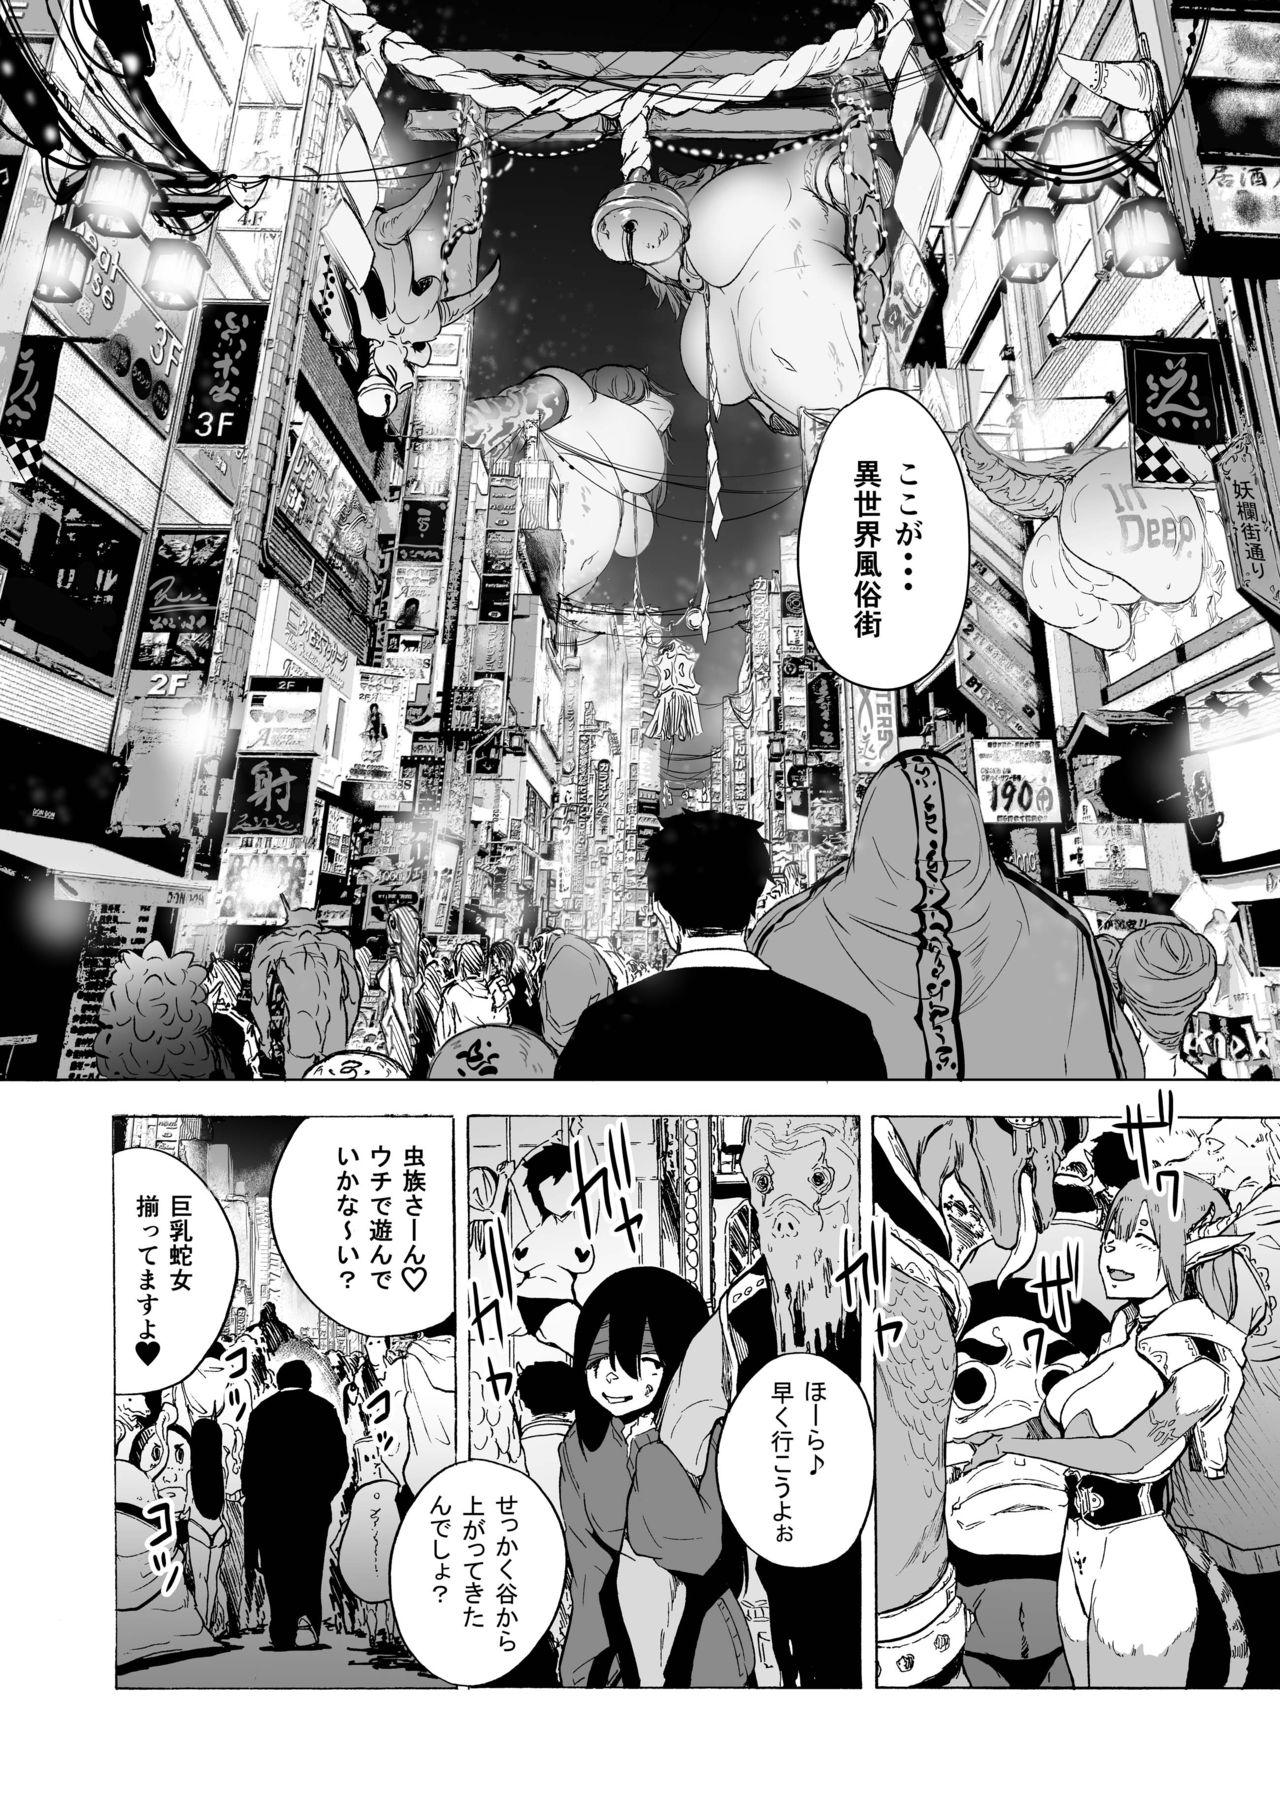 Mas 『亜人風俗』コミックアンソロジー - Original Pauzudo - Page 11